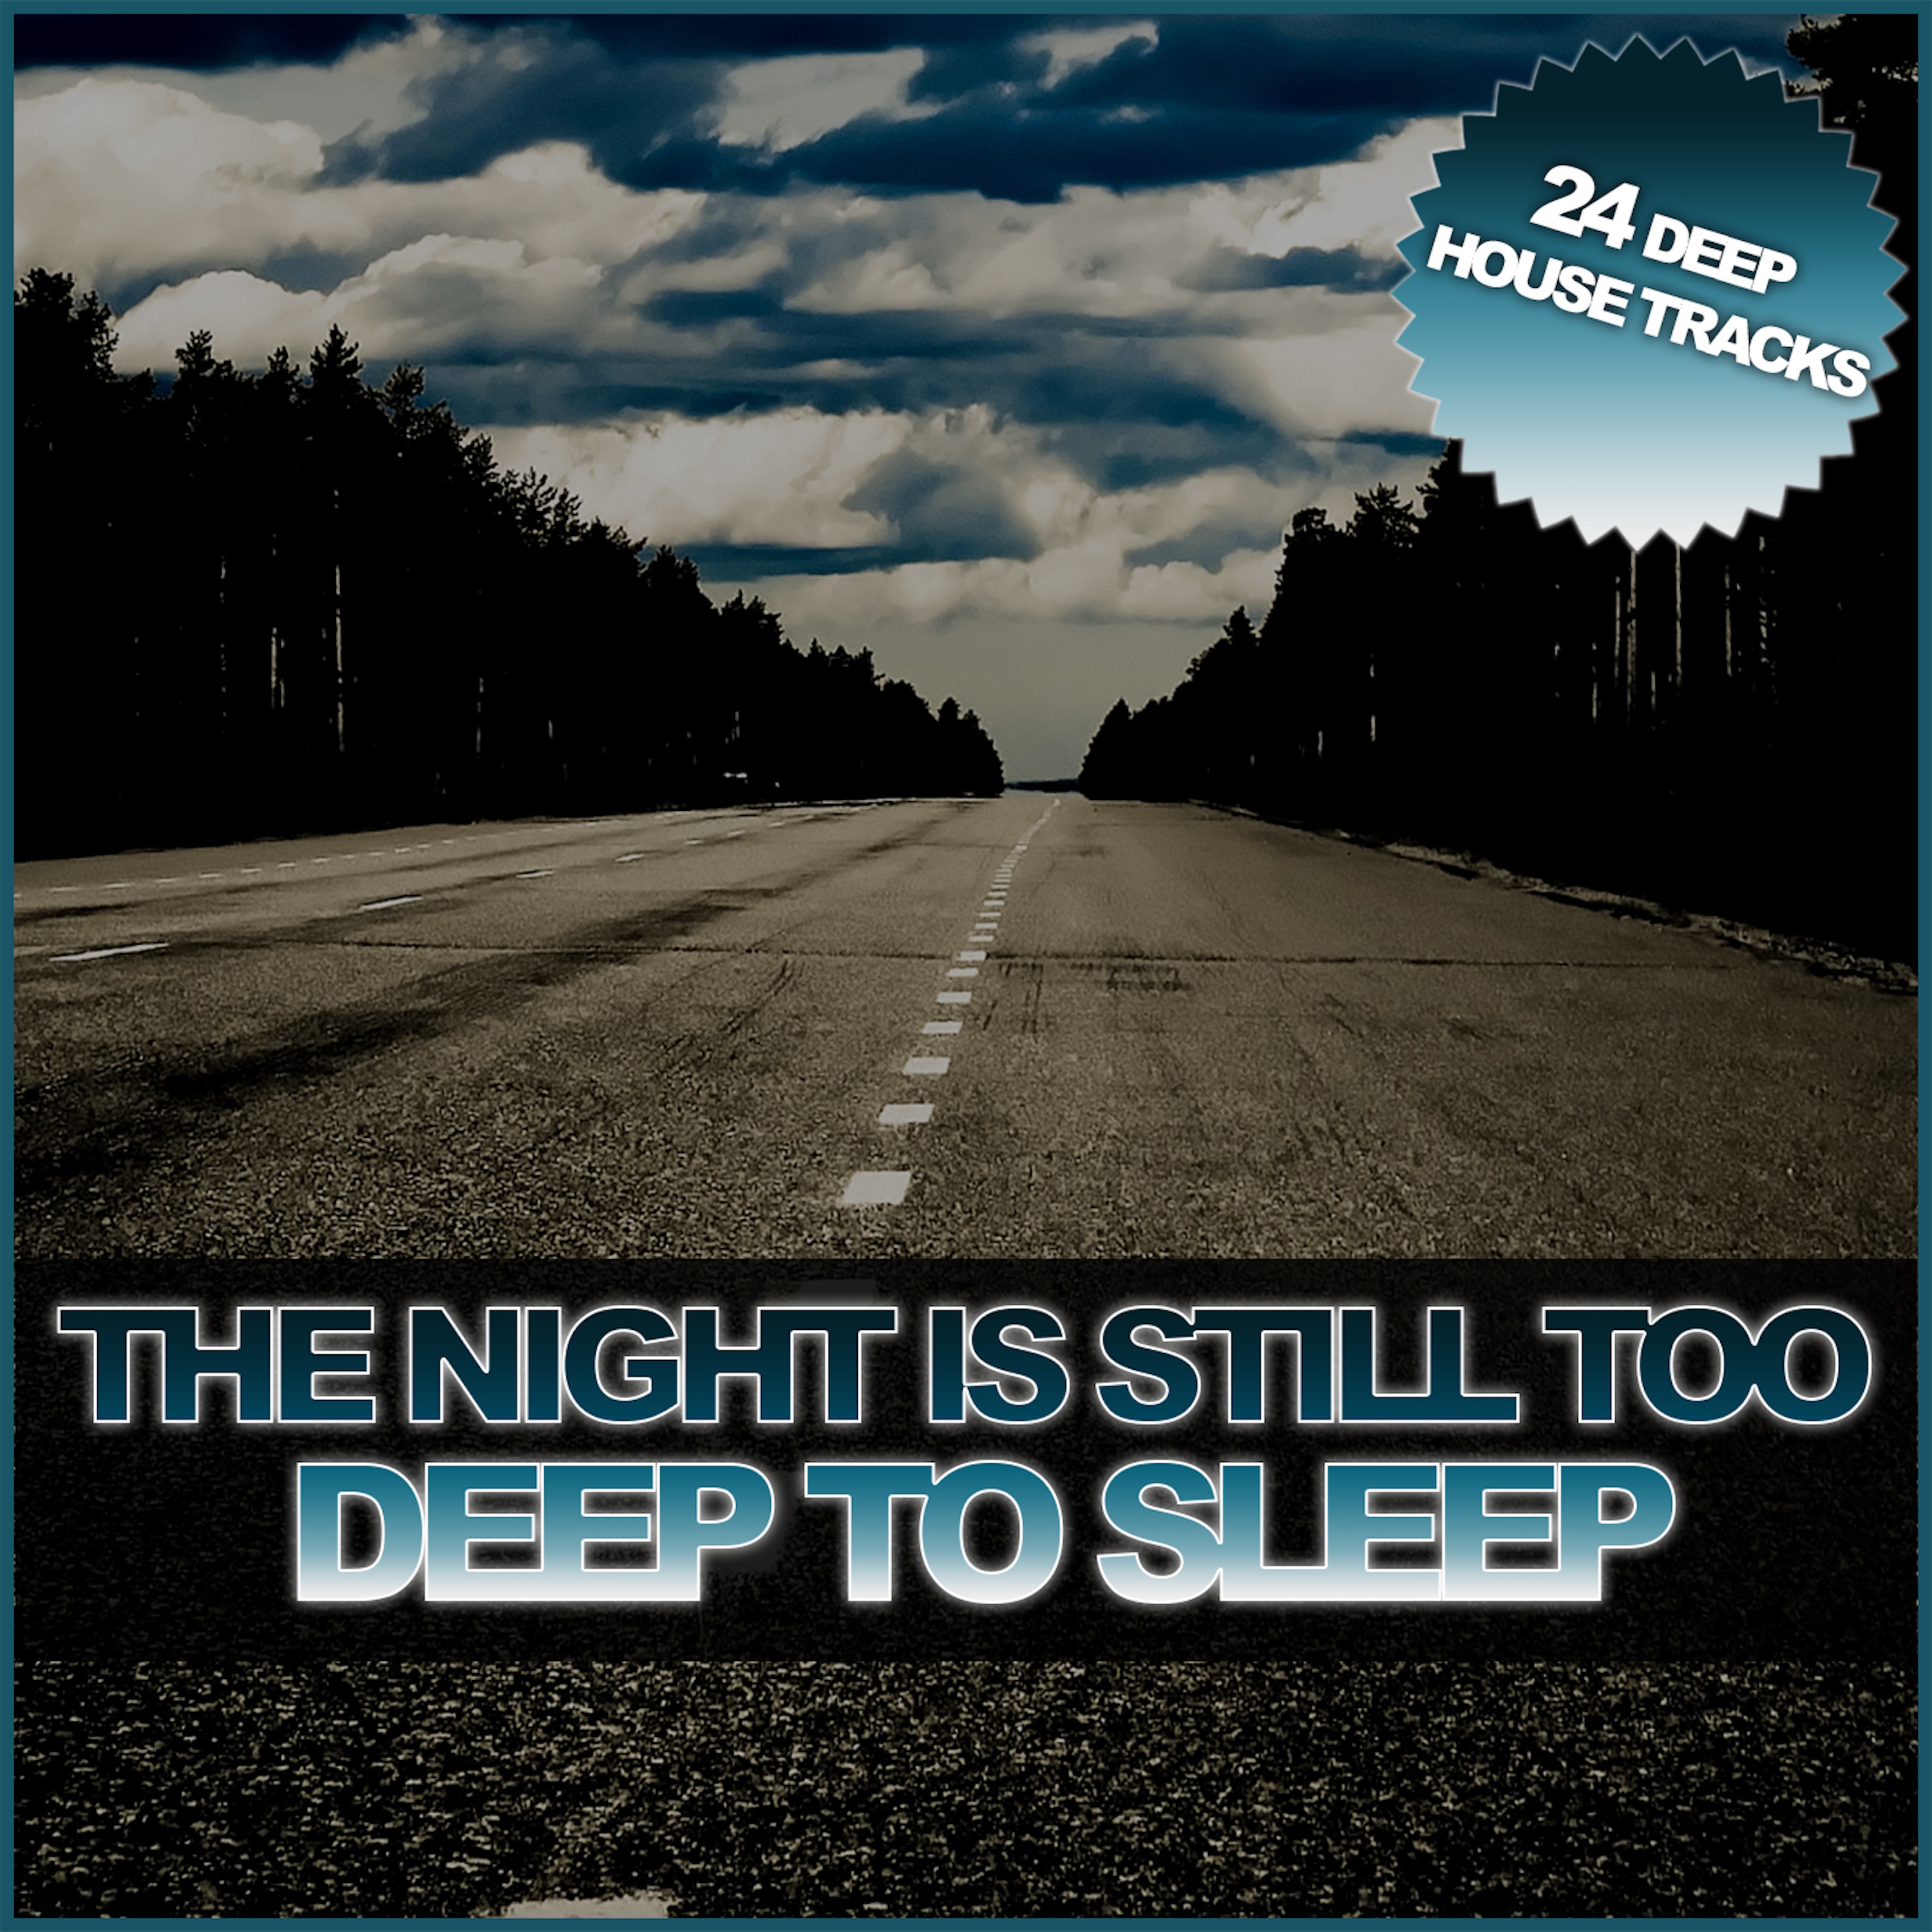 The Night Is Still Too Deep to Sleep